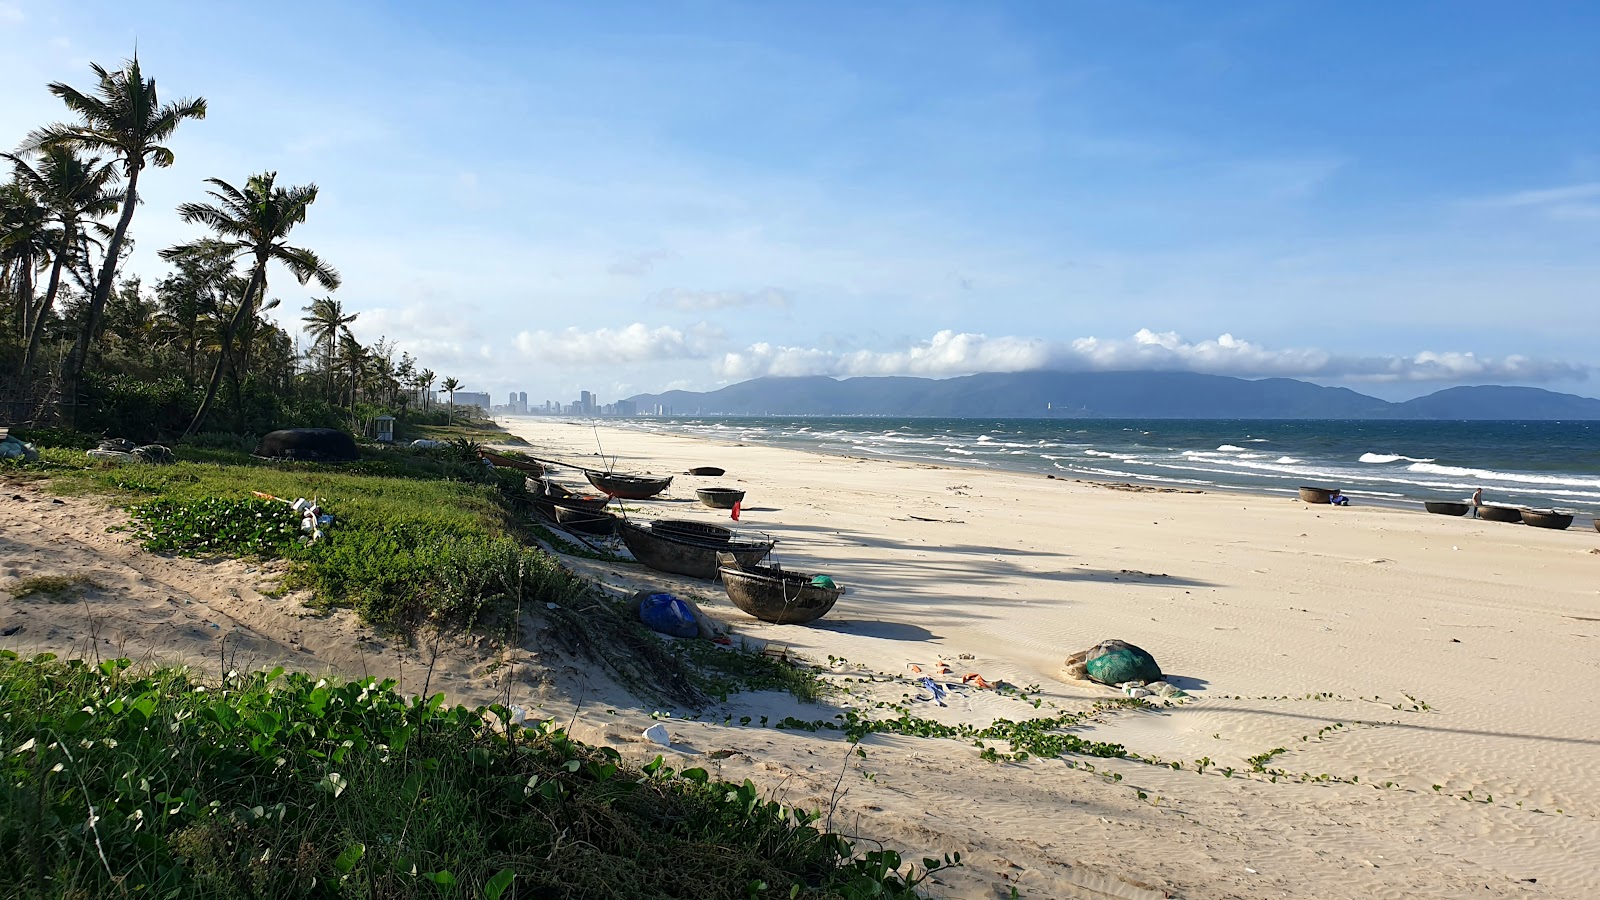 Foto de Tan Tra Beach - lugar popular entre os apreciadores de relaxamento